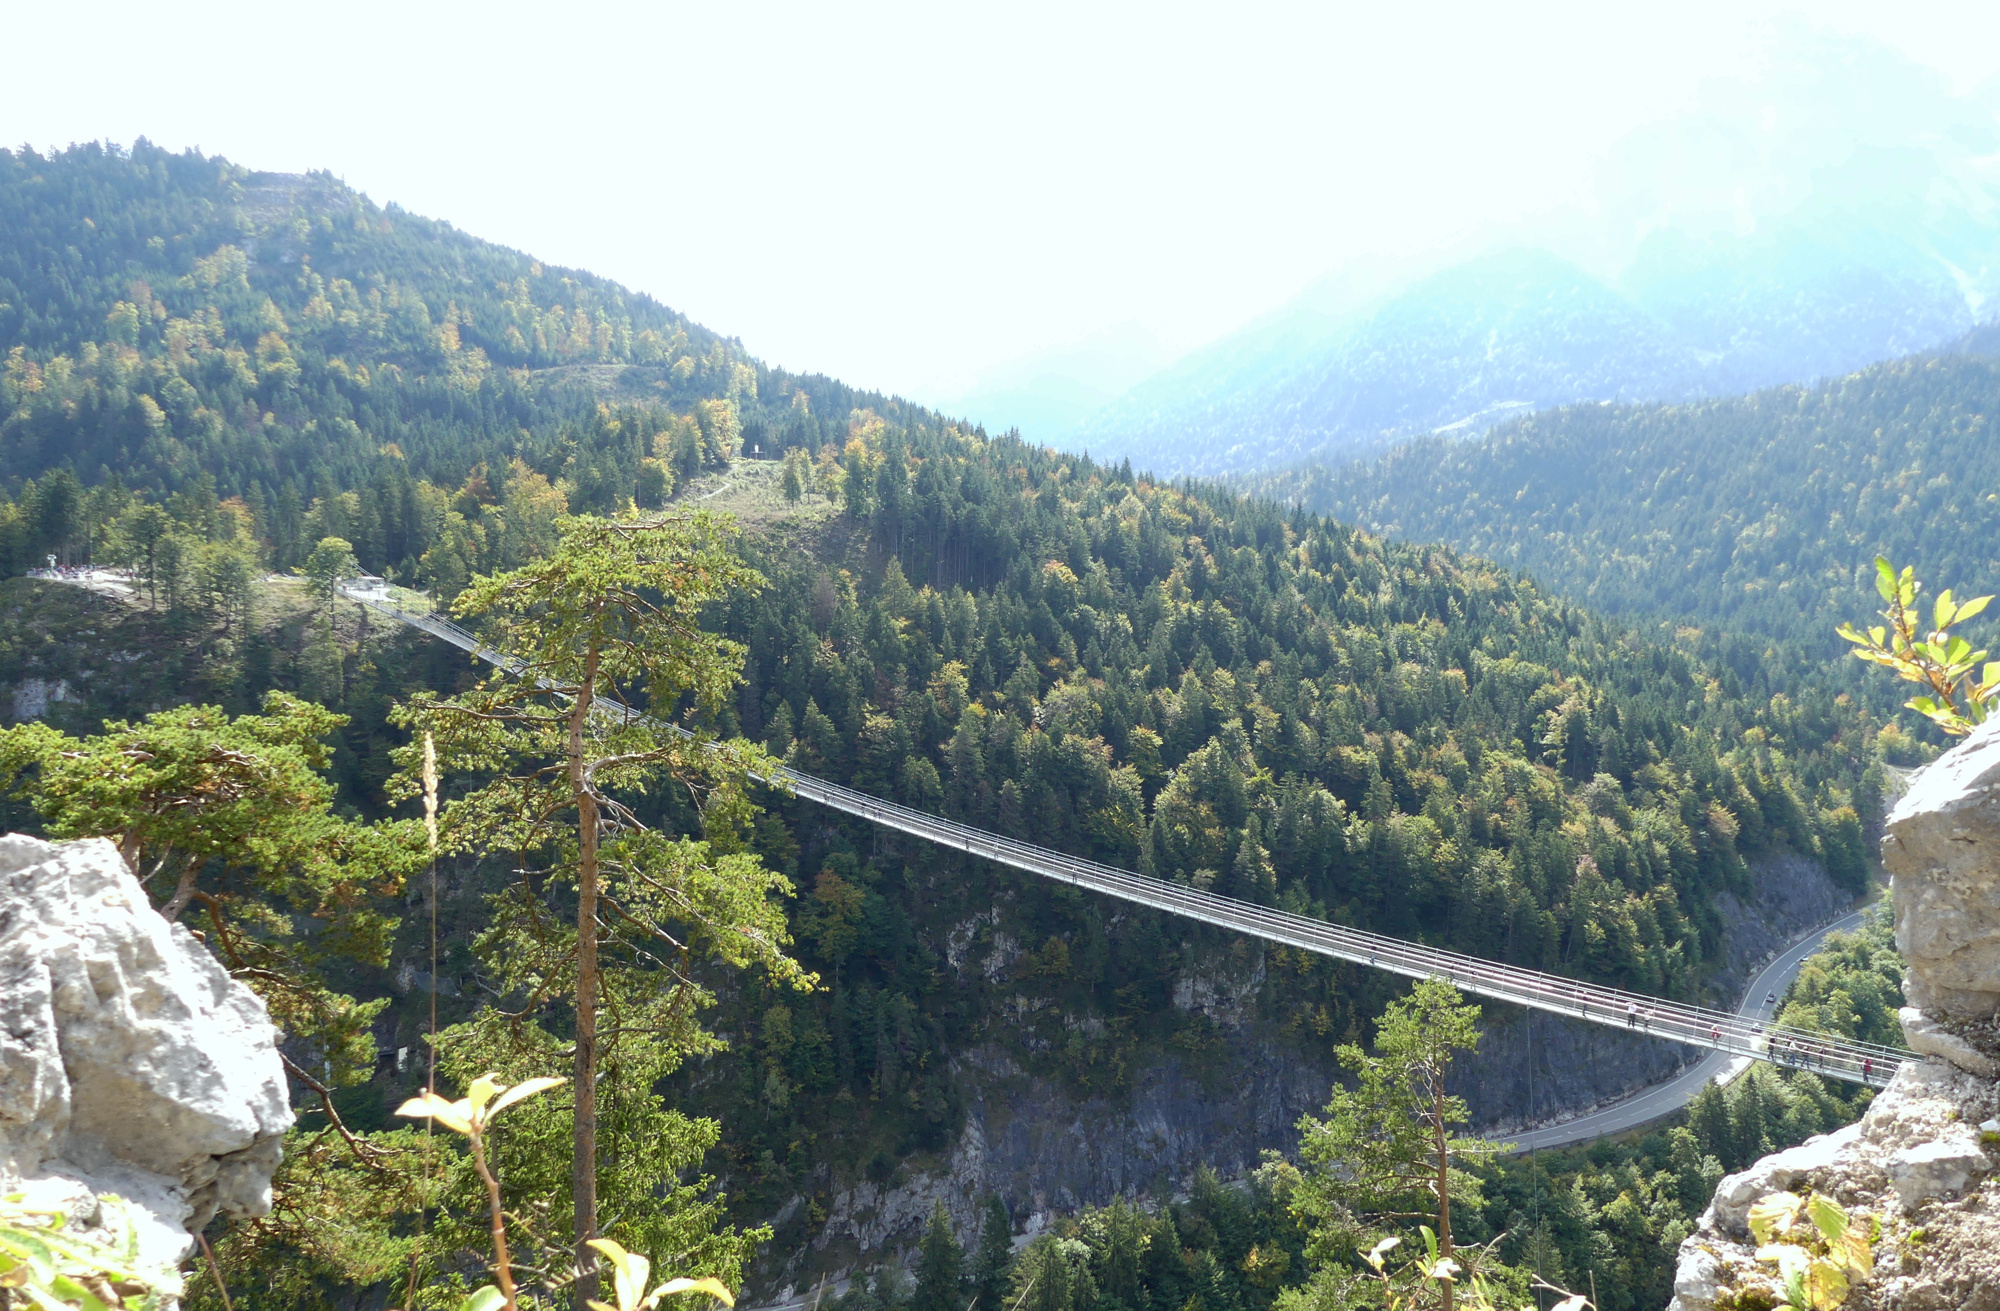 ehrenberg-highline-suspension-bridge-1.jpg